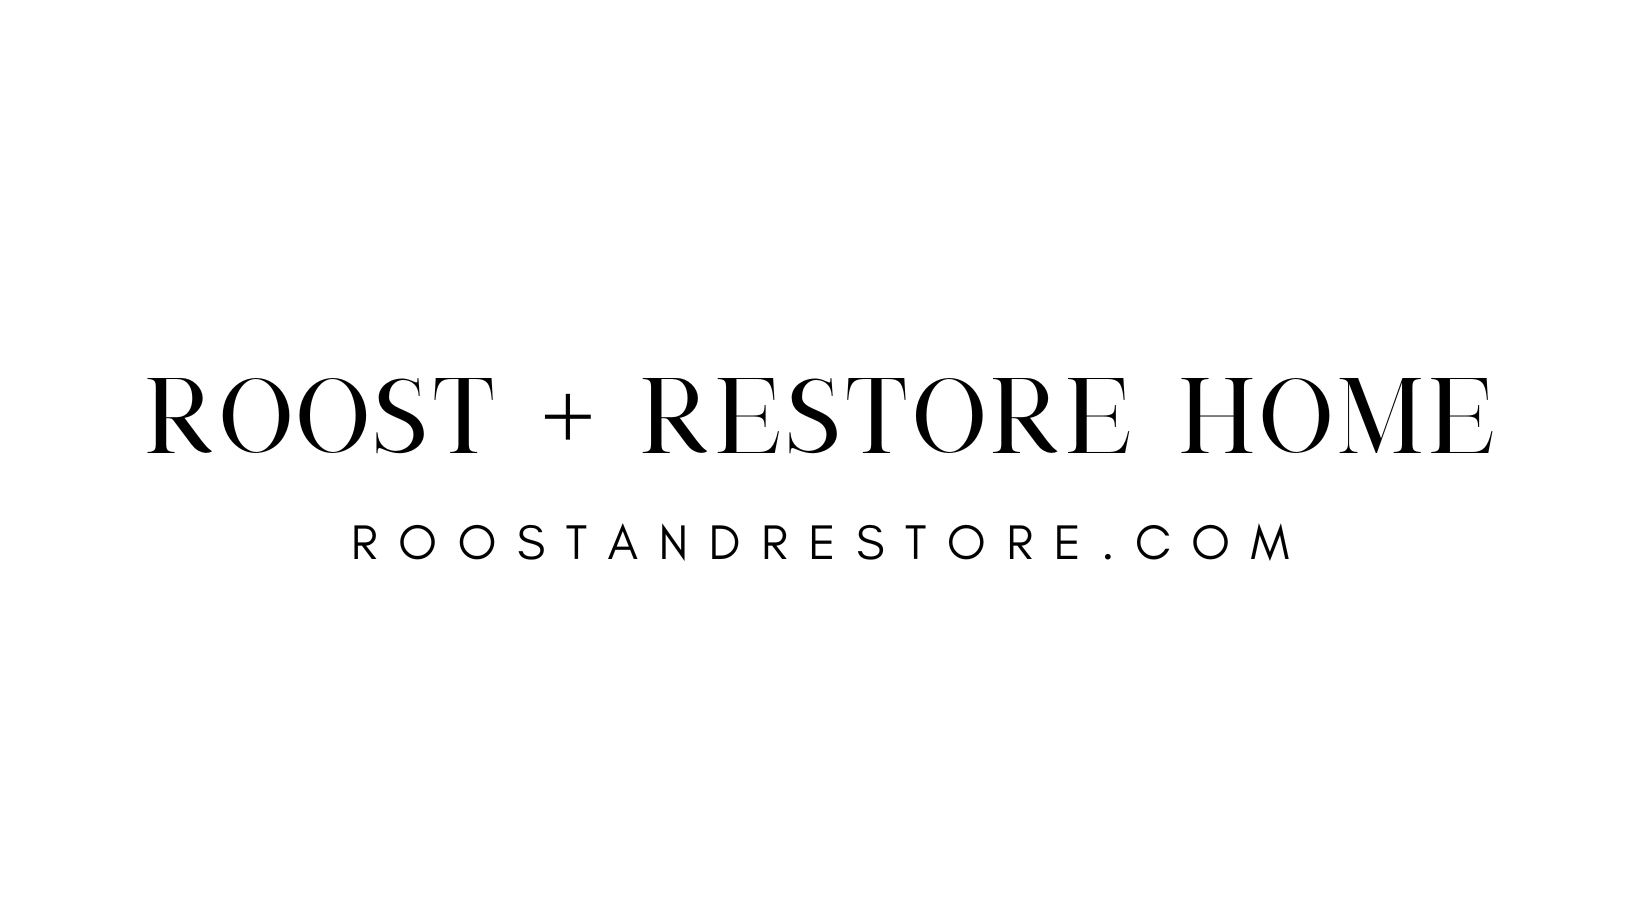 Roost + Restore